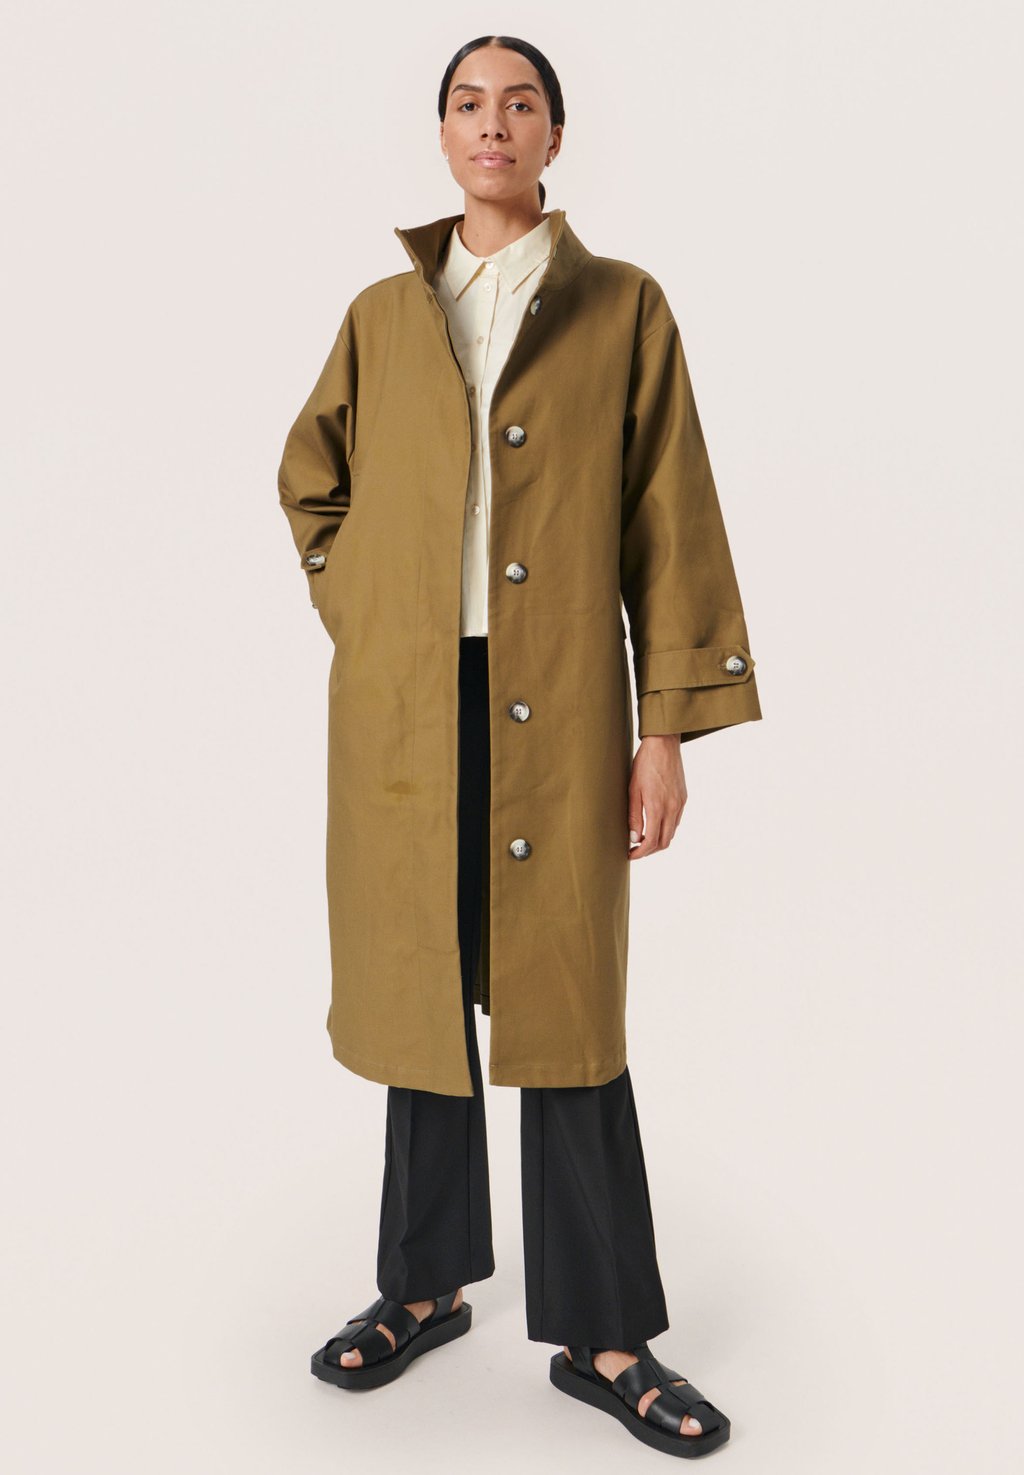 Классическое пальто CADE Soaked in Luxury, каперсы классическое пальто в клетку chicka soaked in luxury черный мульти